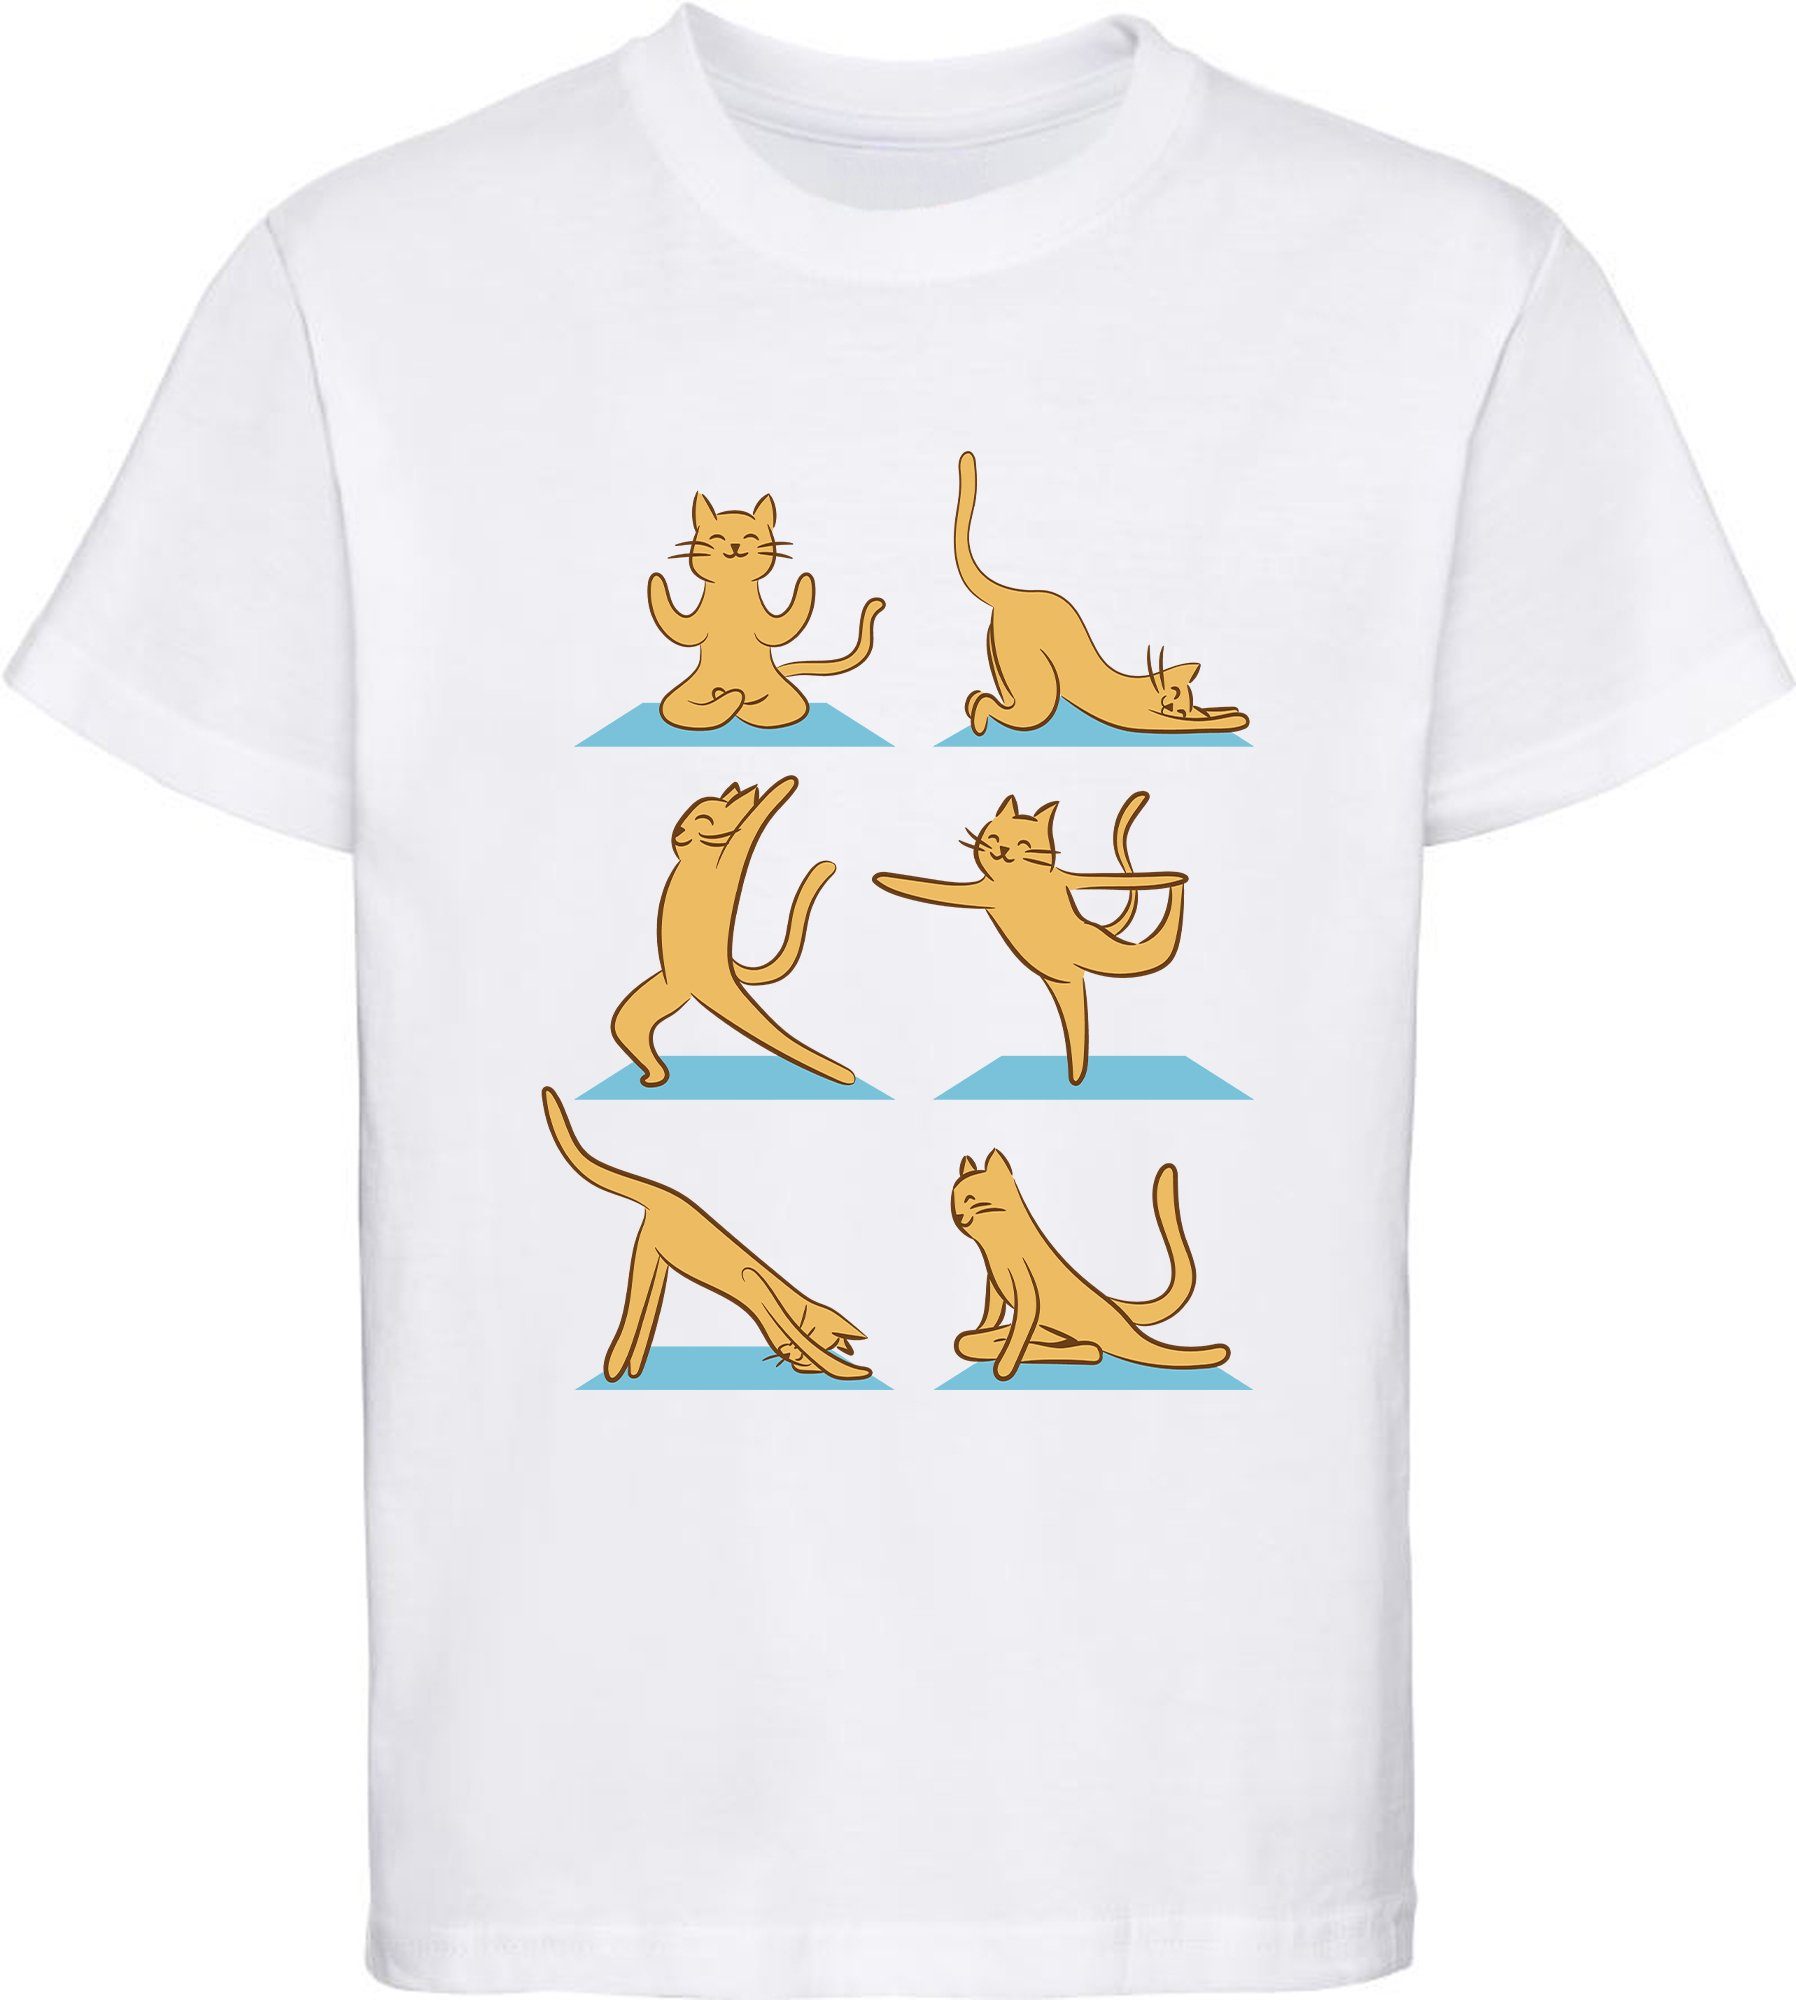 MyDesign24 Print-Shirt bedrucktes Mädchen T-Shirt Yoga Katze Baumwollshirt mit Aufdruck, weiß, schwarz, rot, rosa, i131 weiss